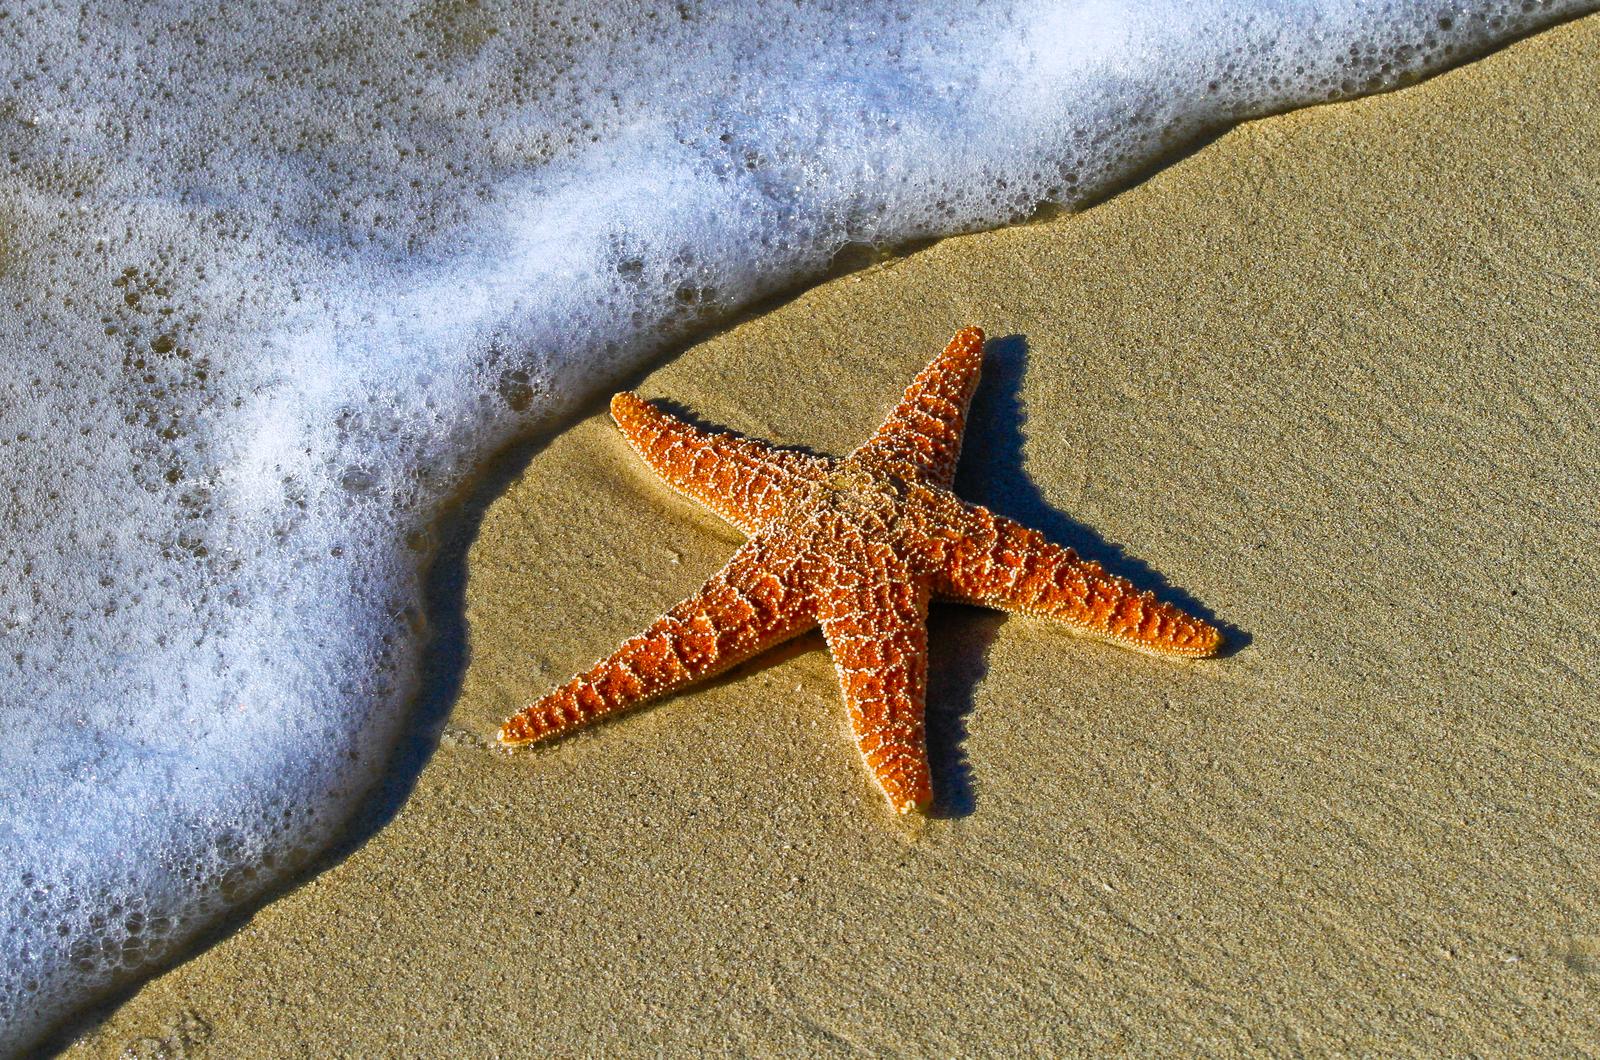 Starfish or sea star